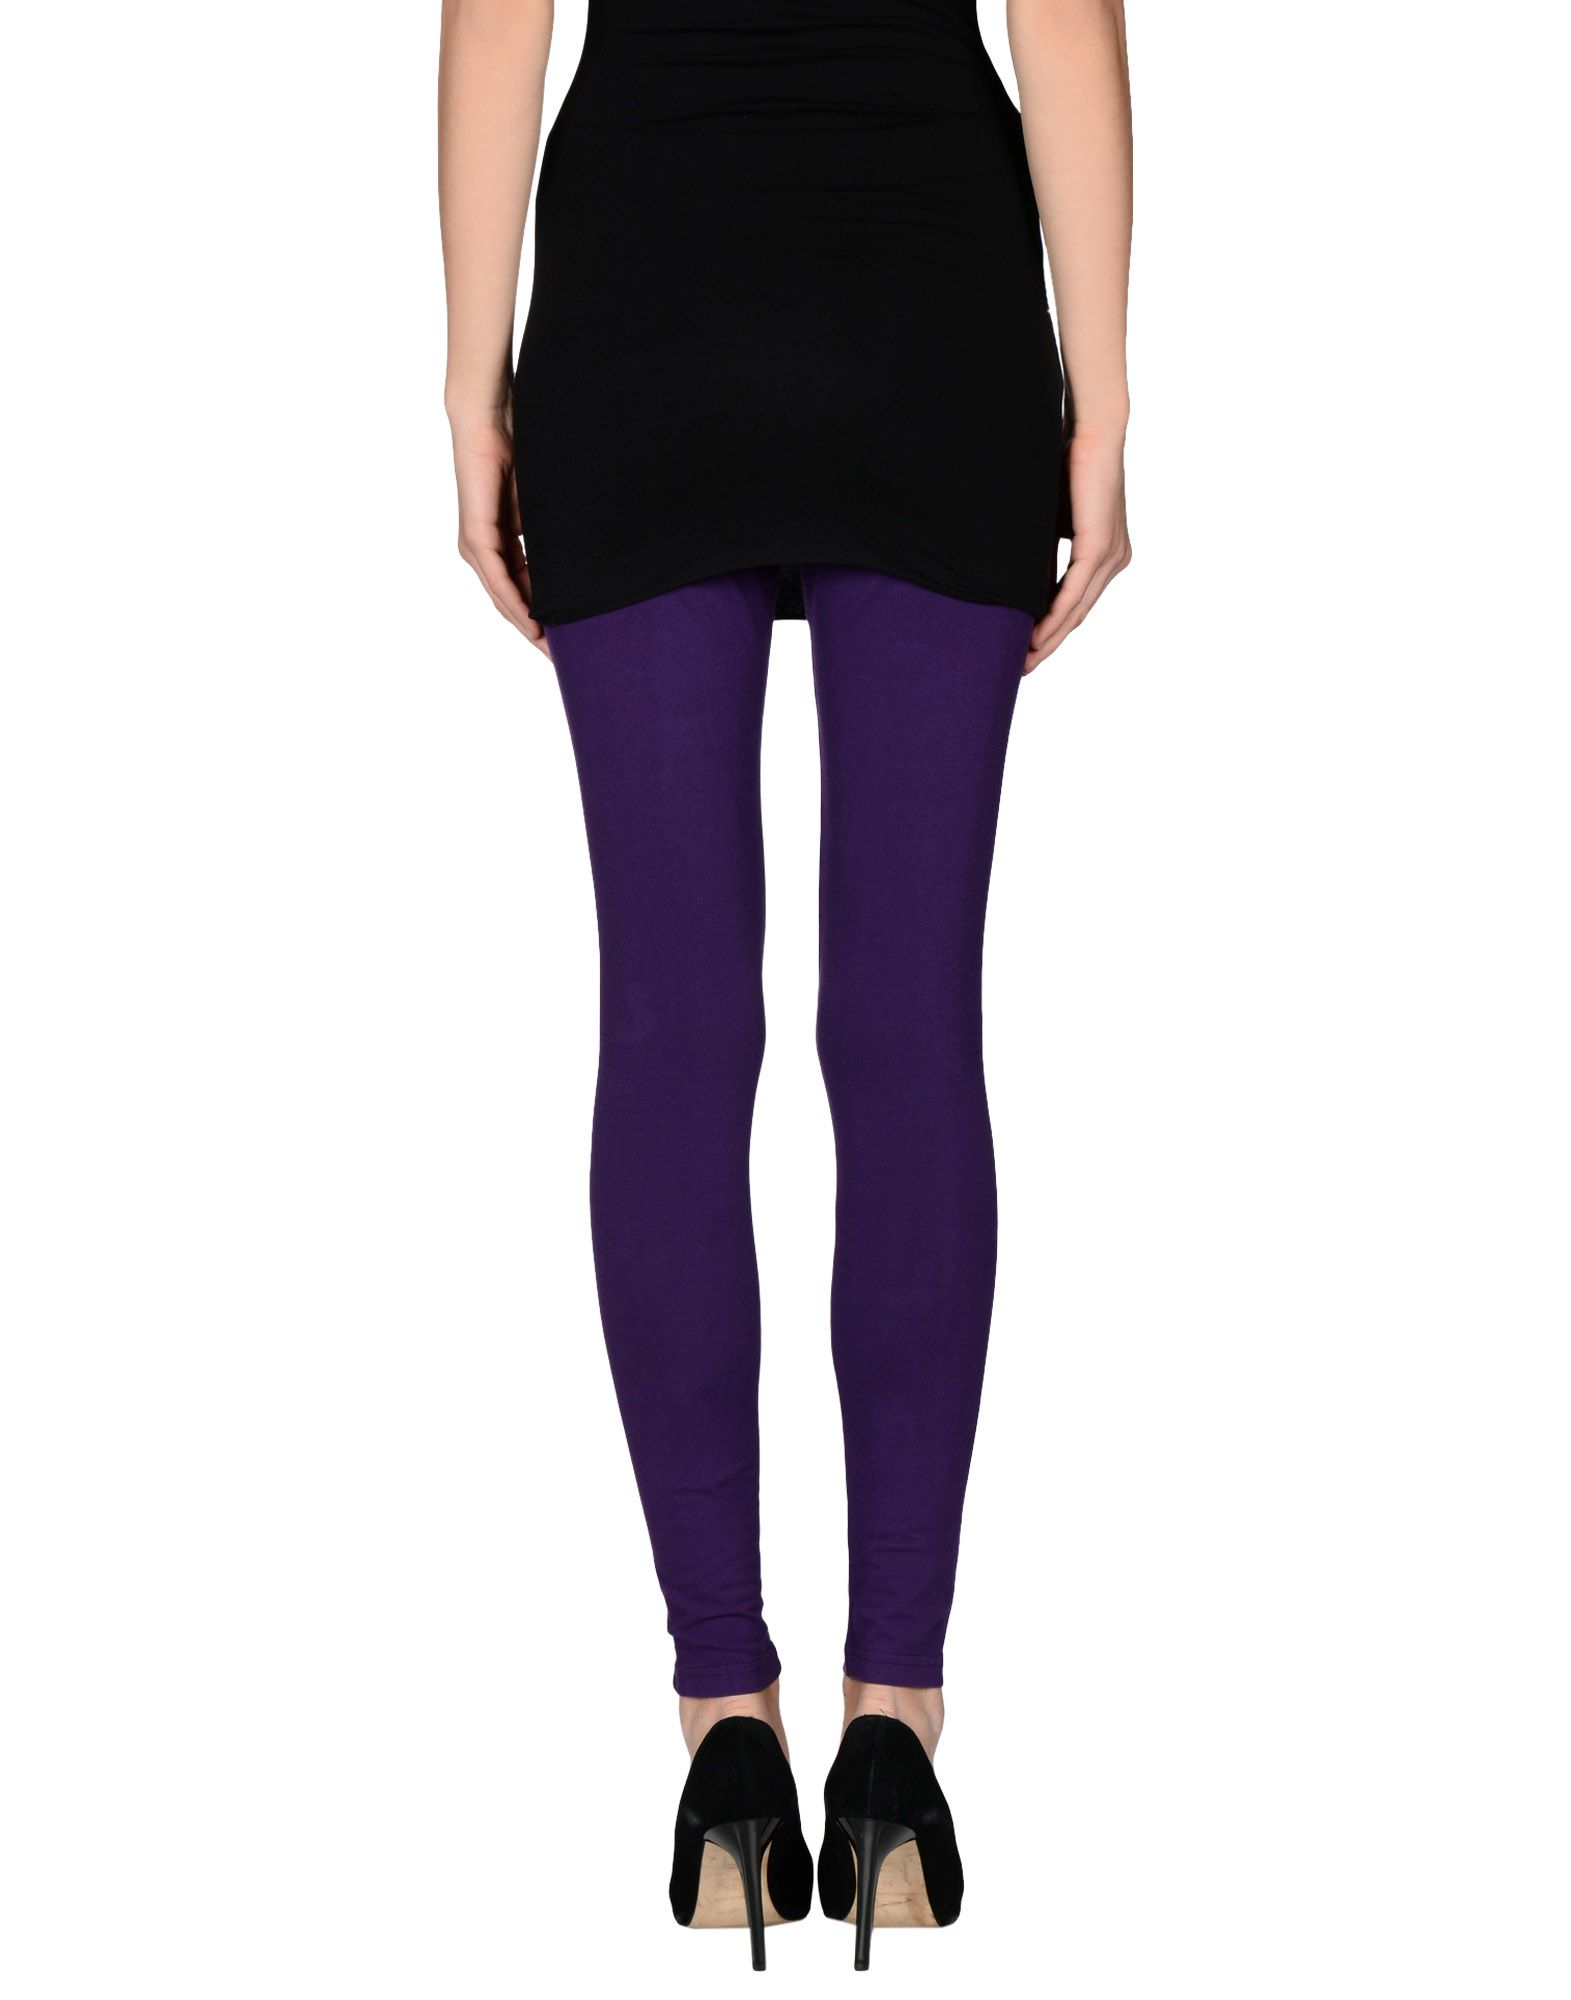 https://cdnc.lystit.com/photos/036b-2015/10/22/ea7-dark-purple-leggings-purple-product-0-323969340-normal.jpeg